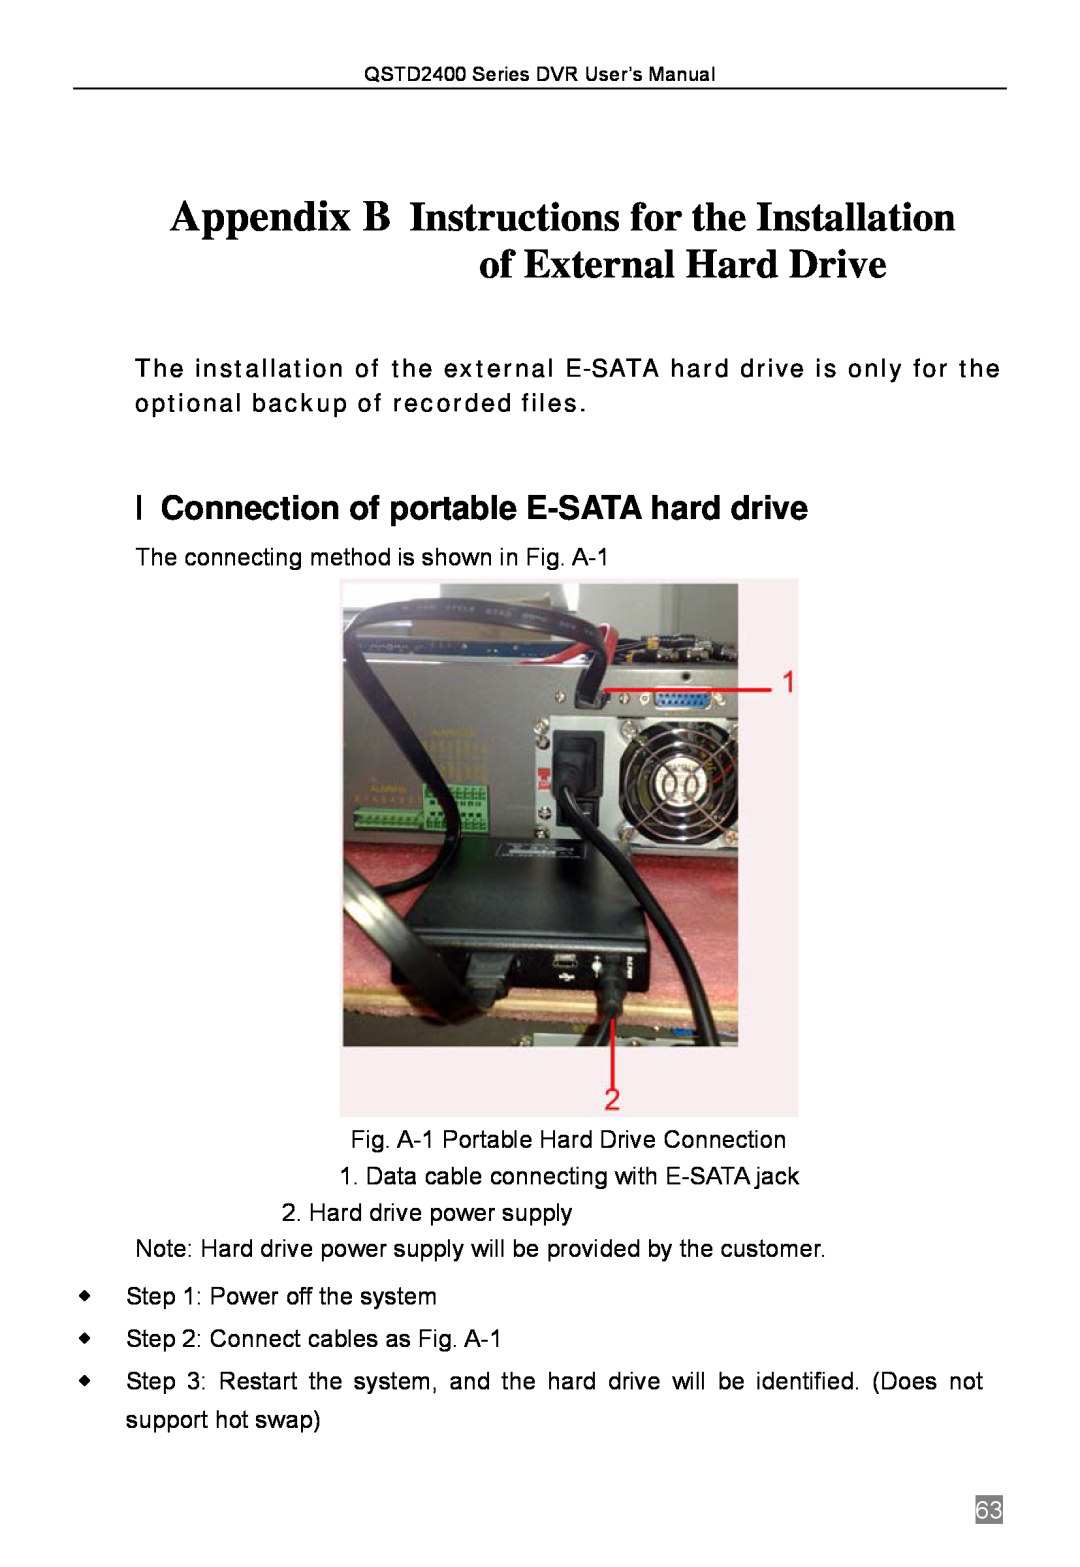 Q-See QSTD2408, QSTD2416, QSTD2404 user manual Appendix B Instructions for the Installation of External Hard Drive 